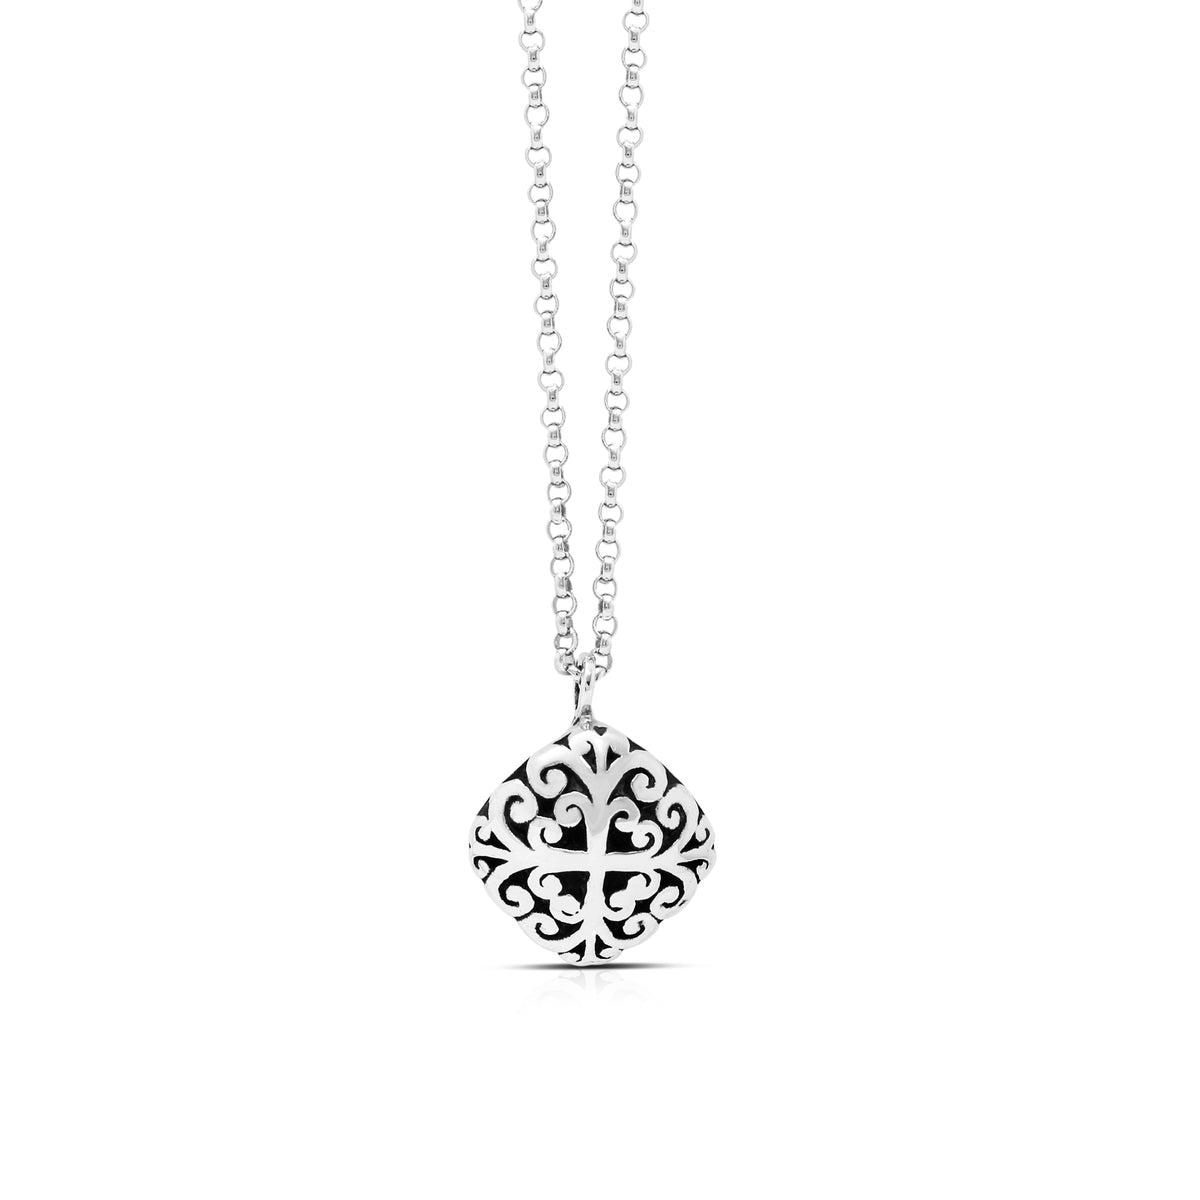 Classic Geometric Signature Scroll Diamond Shaped Drop Pendant Necklace. 14mm x 14mm Pendant. 18" Chain